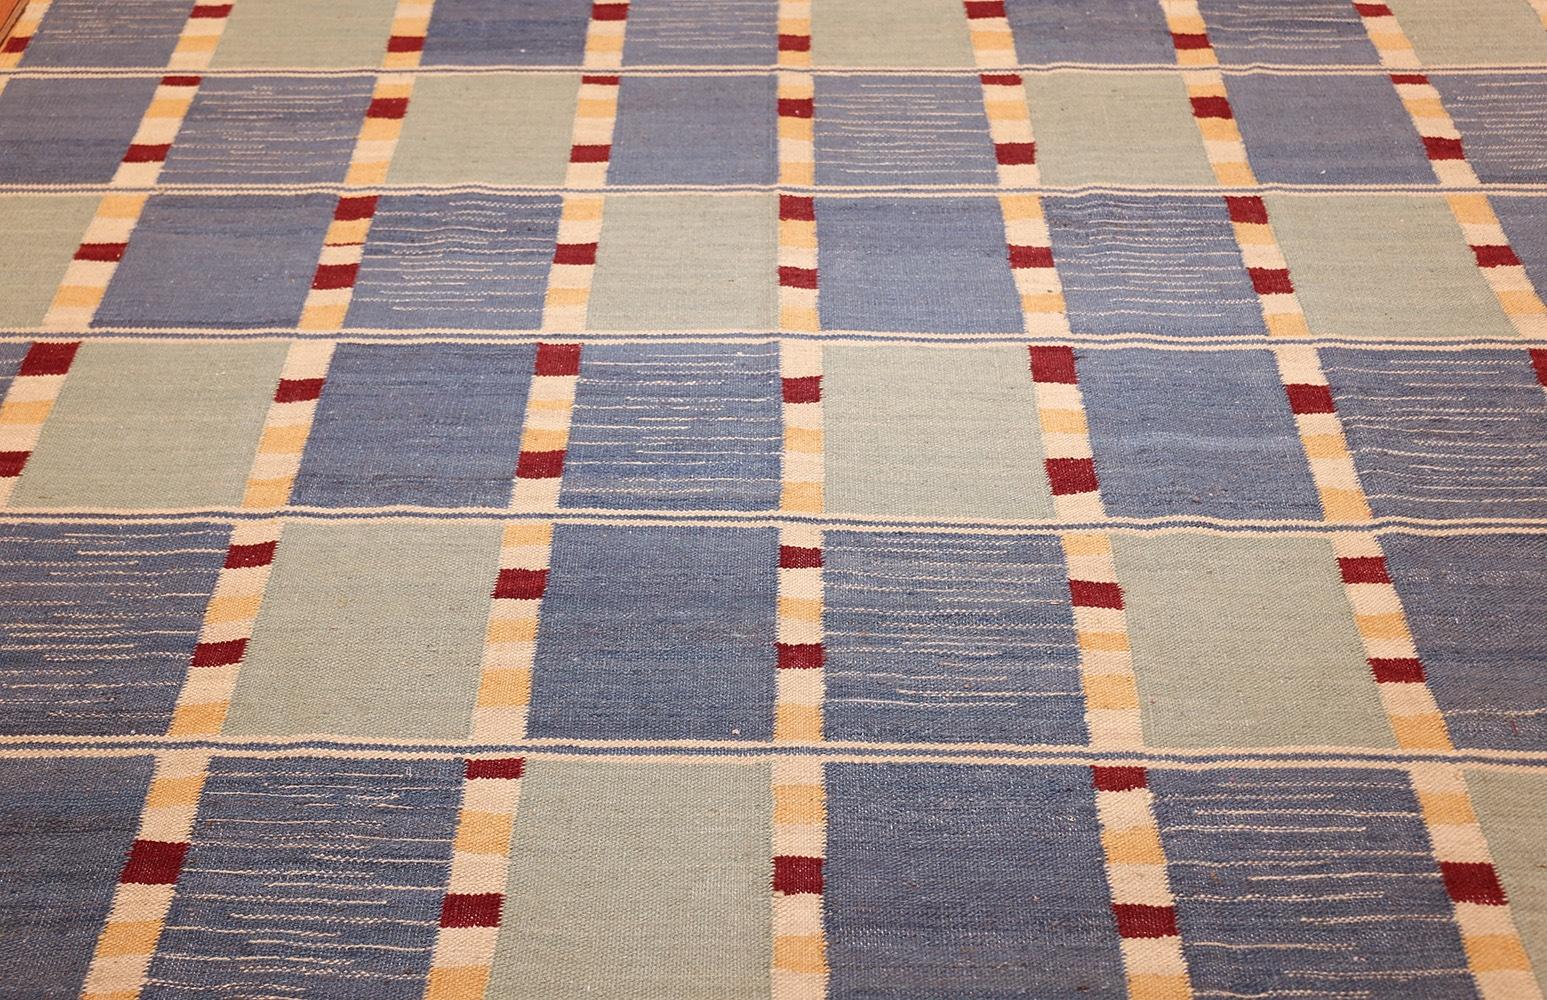 Modern Swedish Inspired Kilim Carpet, Country of Origin: India, Circa Date: 21st Century. Size: 7 ft x 10 ft (2.13 m x 3.05 m)

